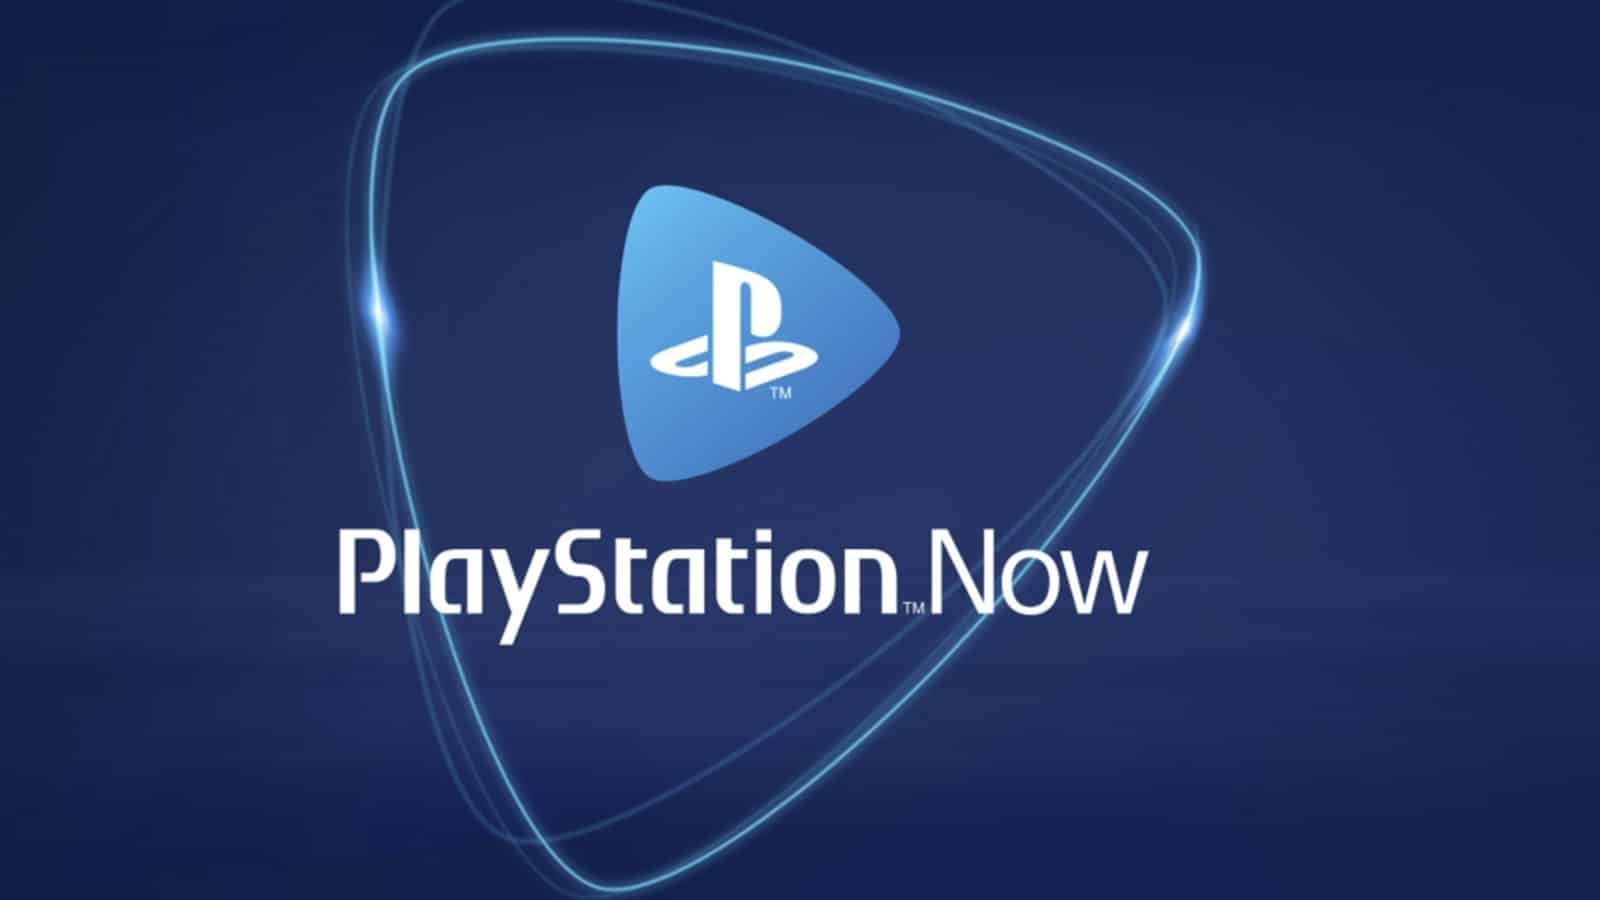 PS NOW NOVEMBER 2020  Playstation Now New Games November 2020 